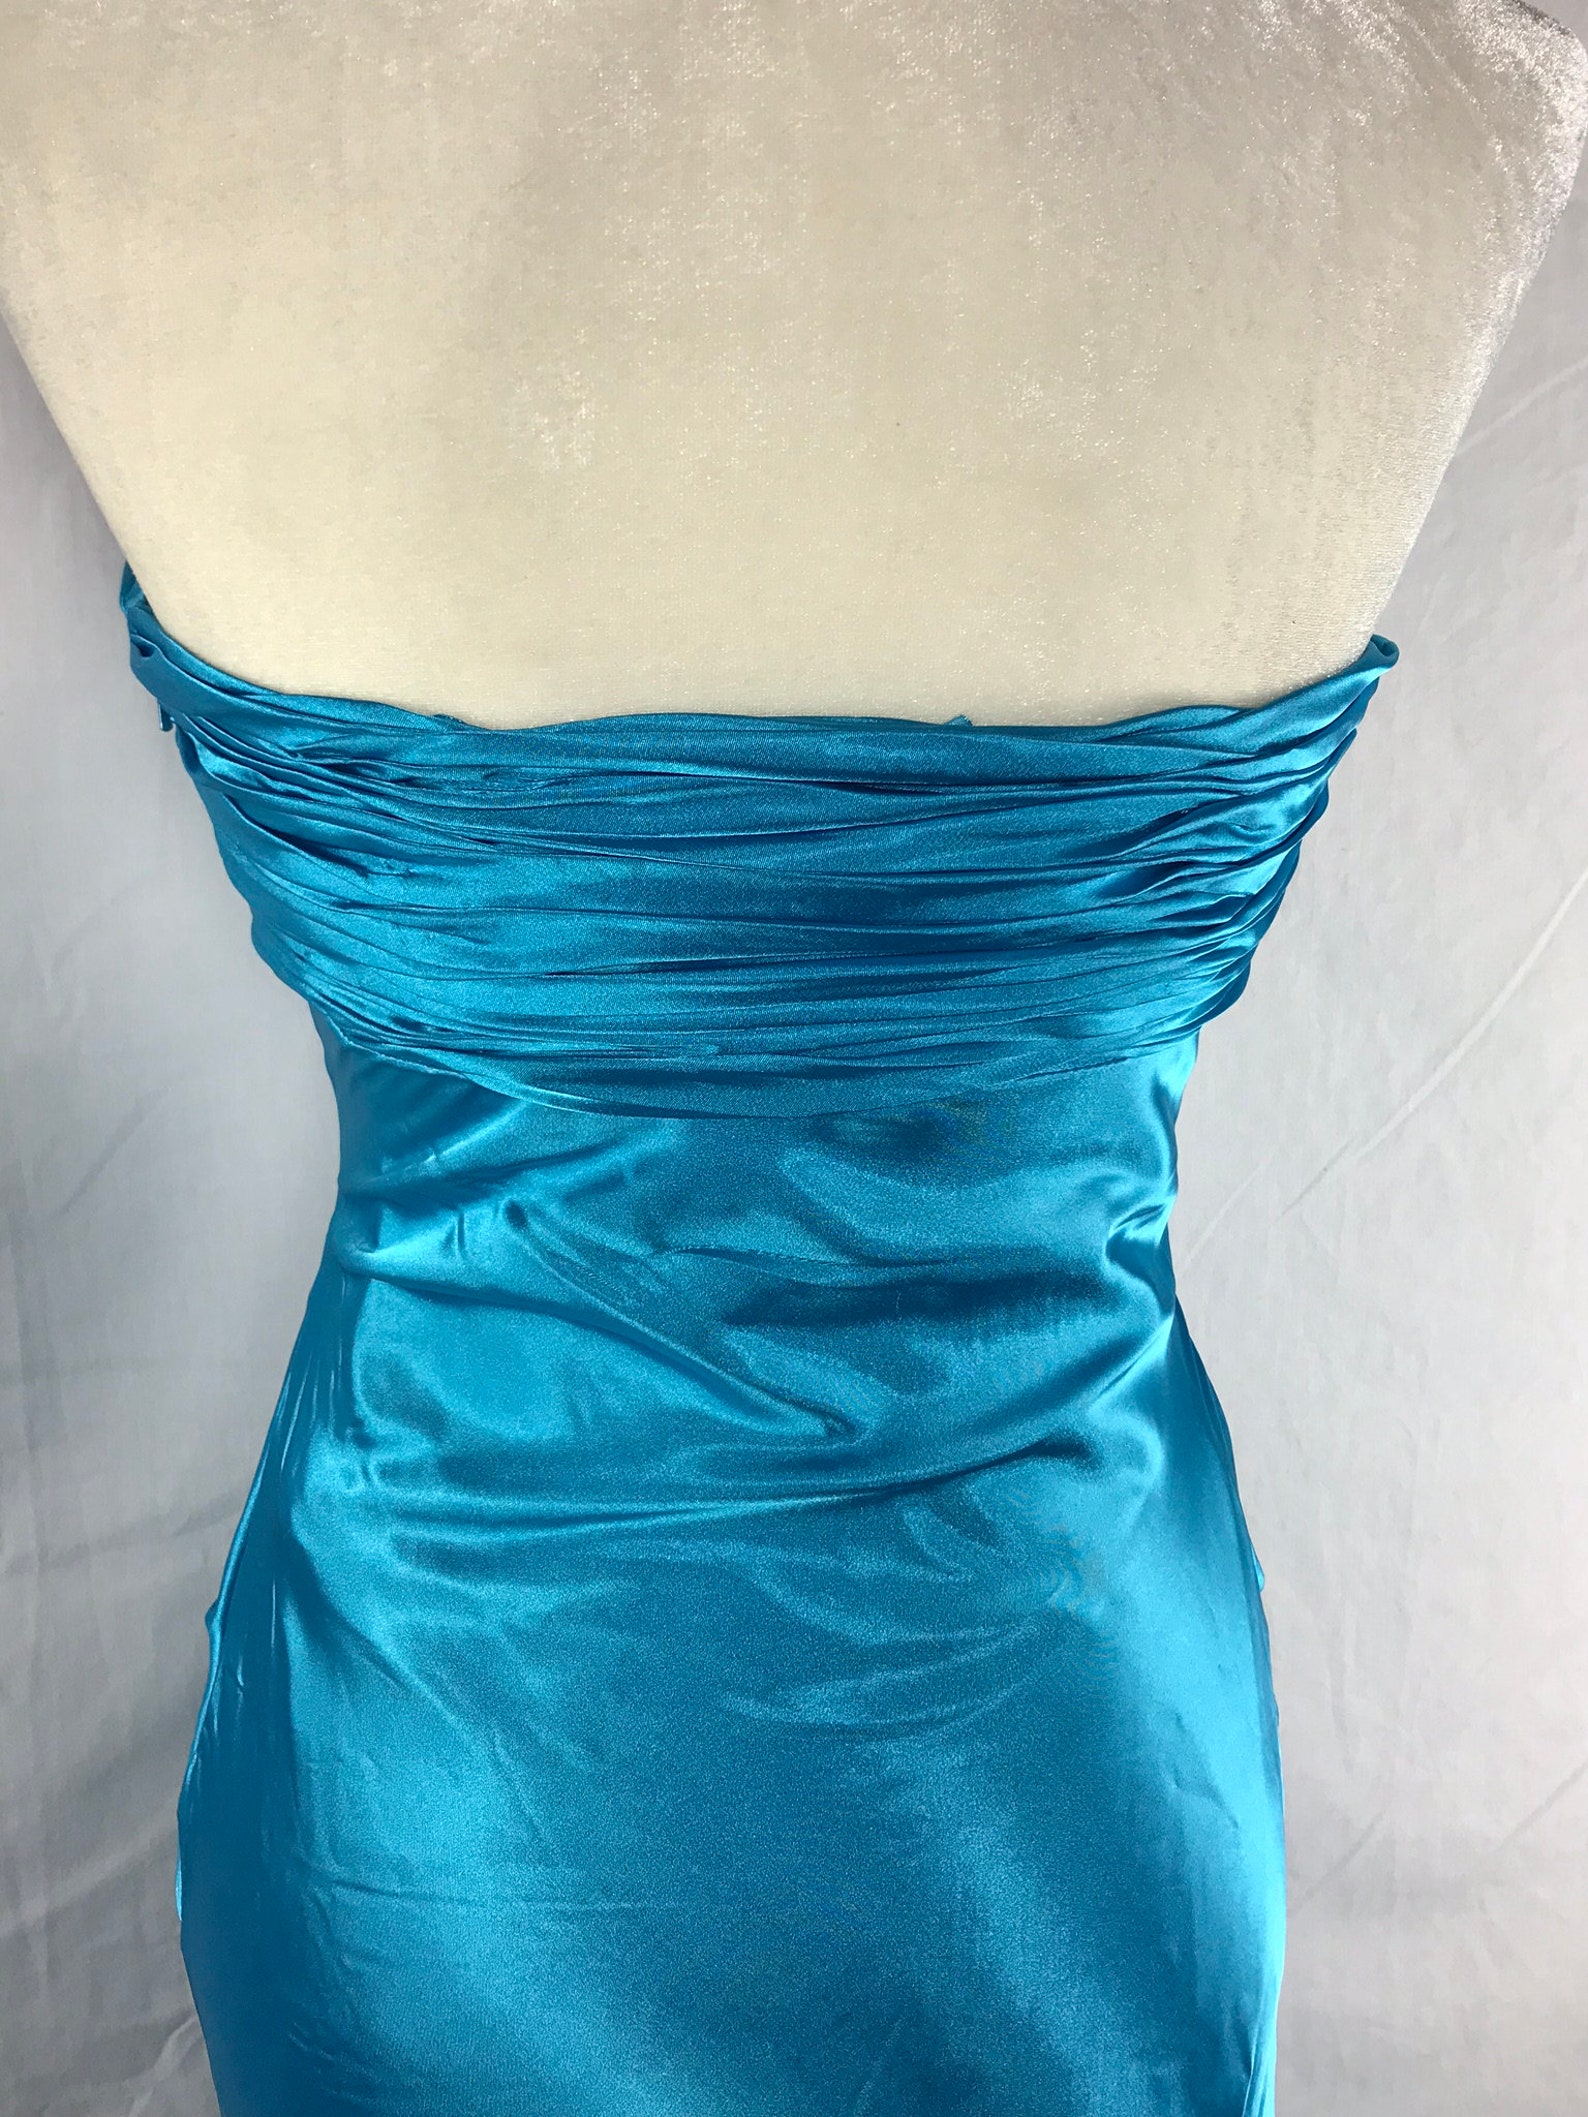 Vibrant Blue Exotic Gown Dress Mermaid Sheath Regal style | Etsy